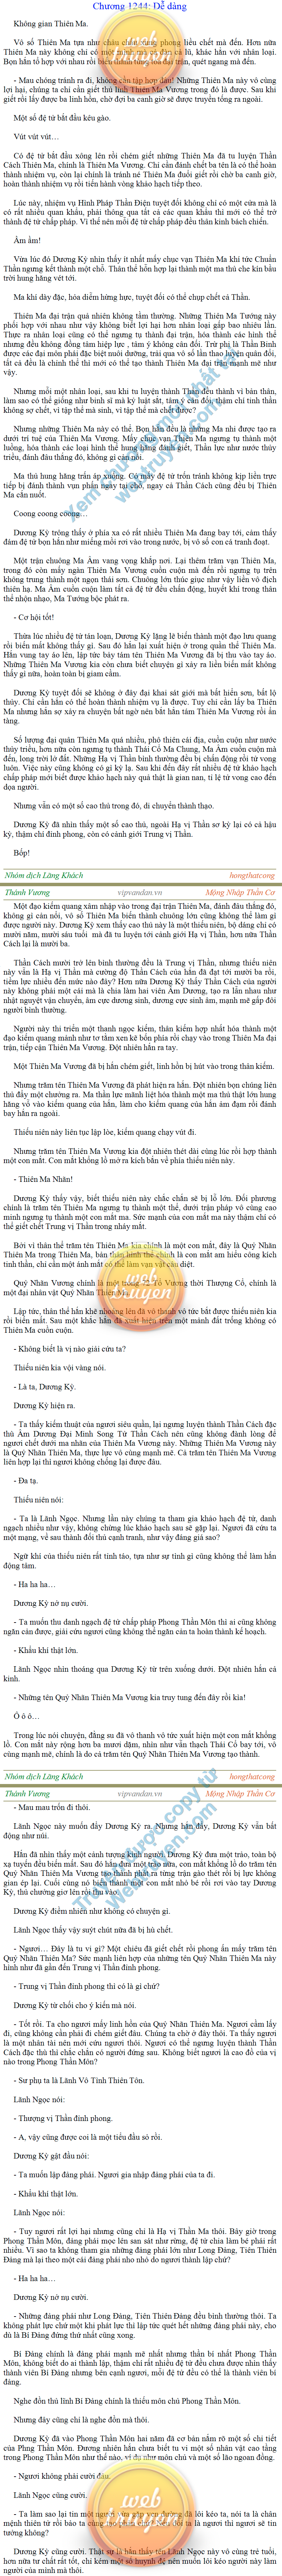 Thanh-vuong-1244.png